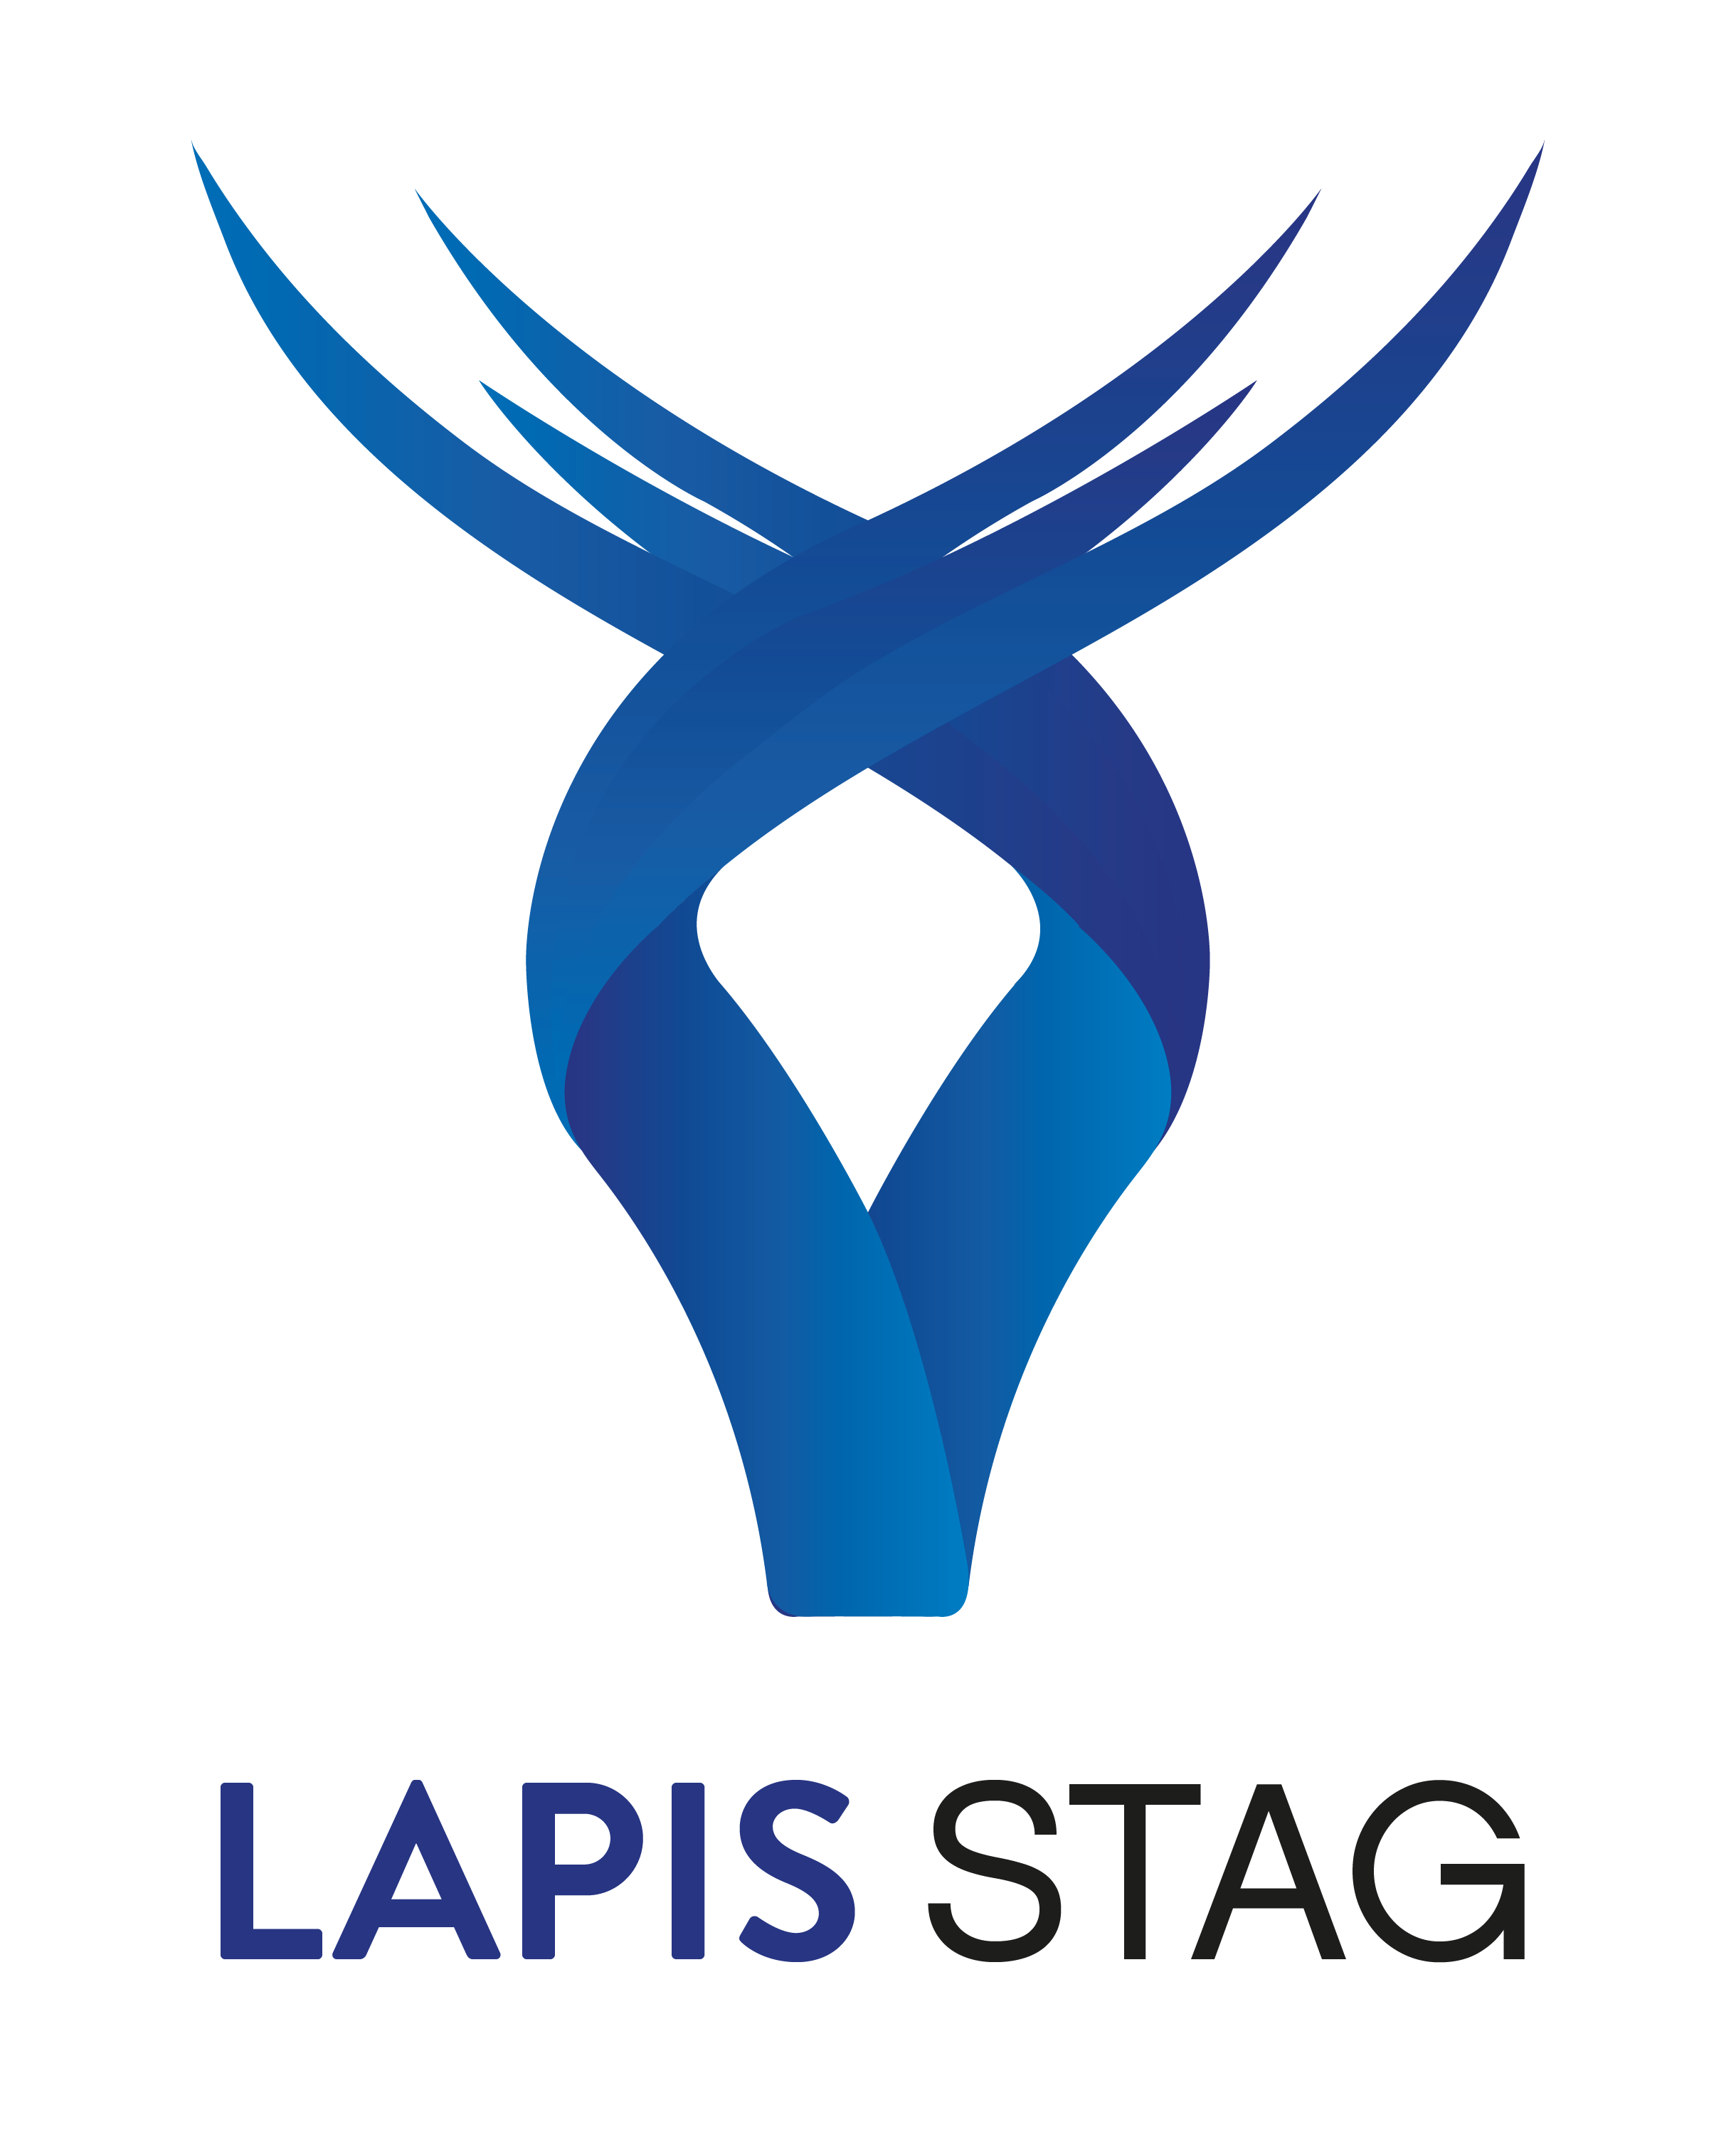 Lapis Stag Digital Marketing Agency